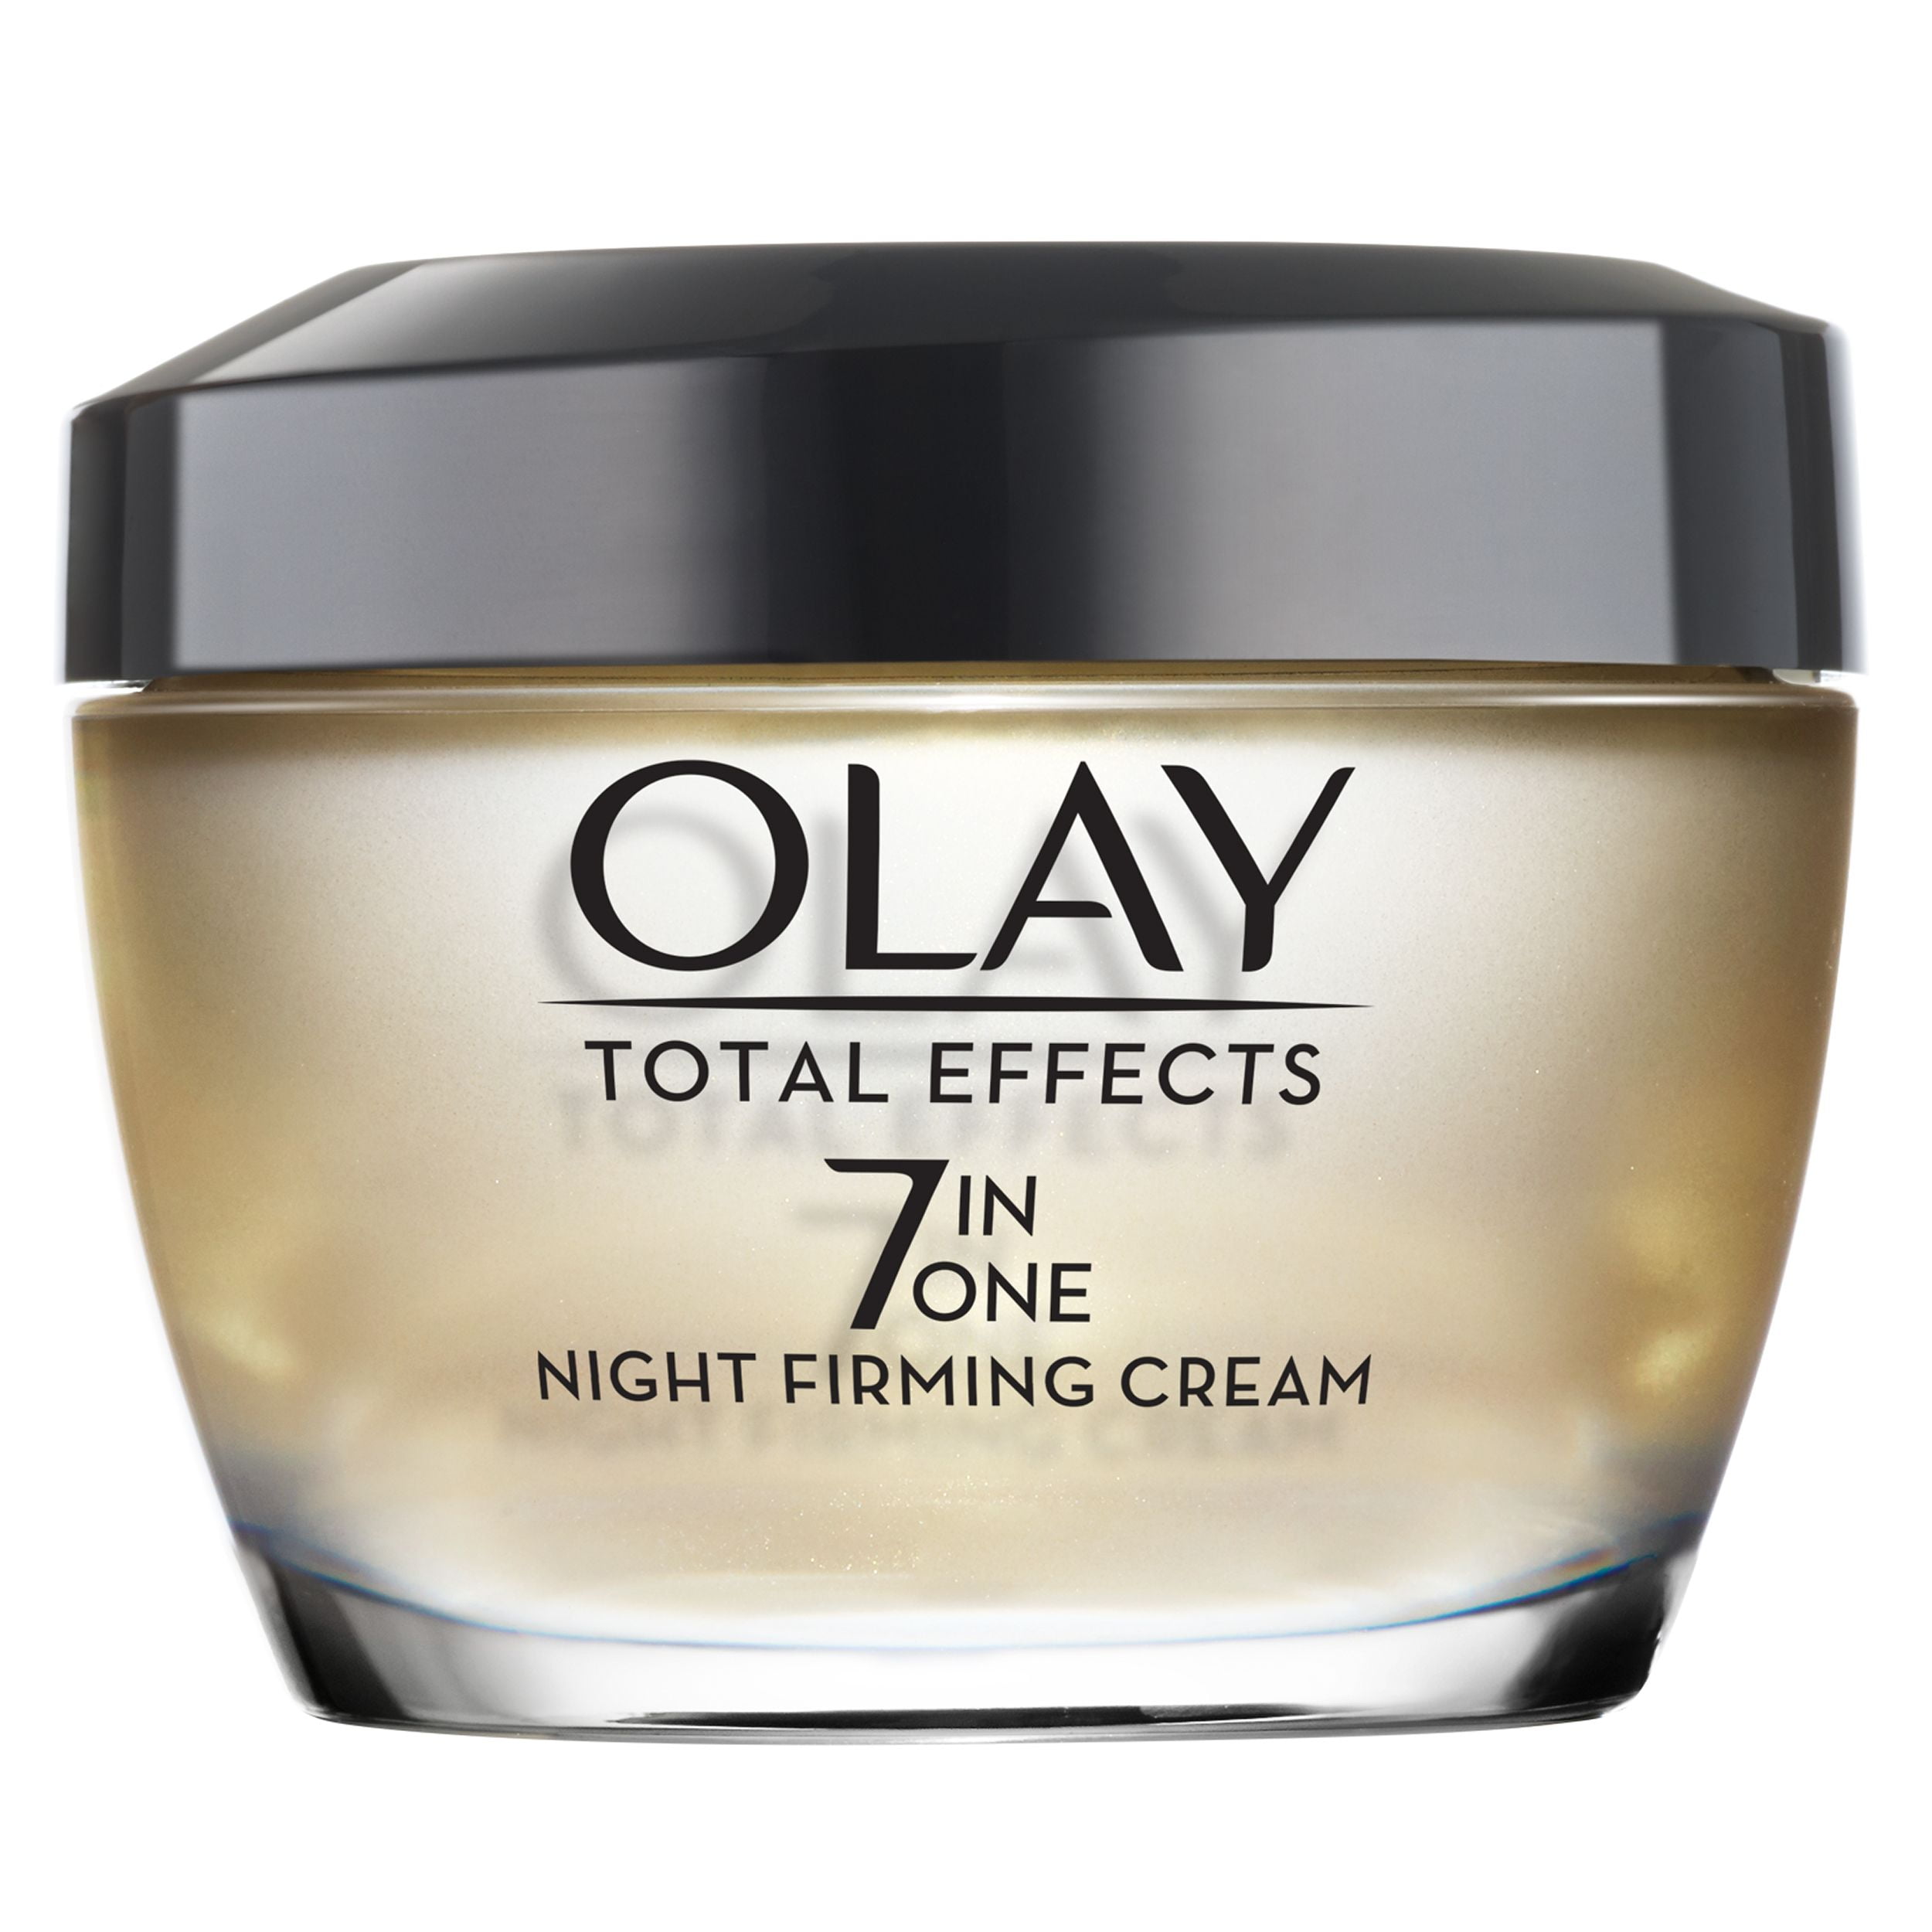 Olay firming night cream